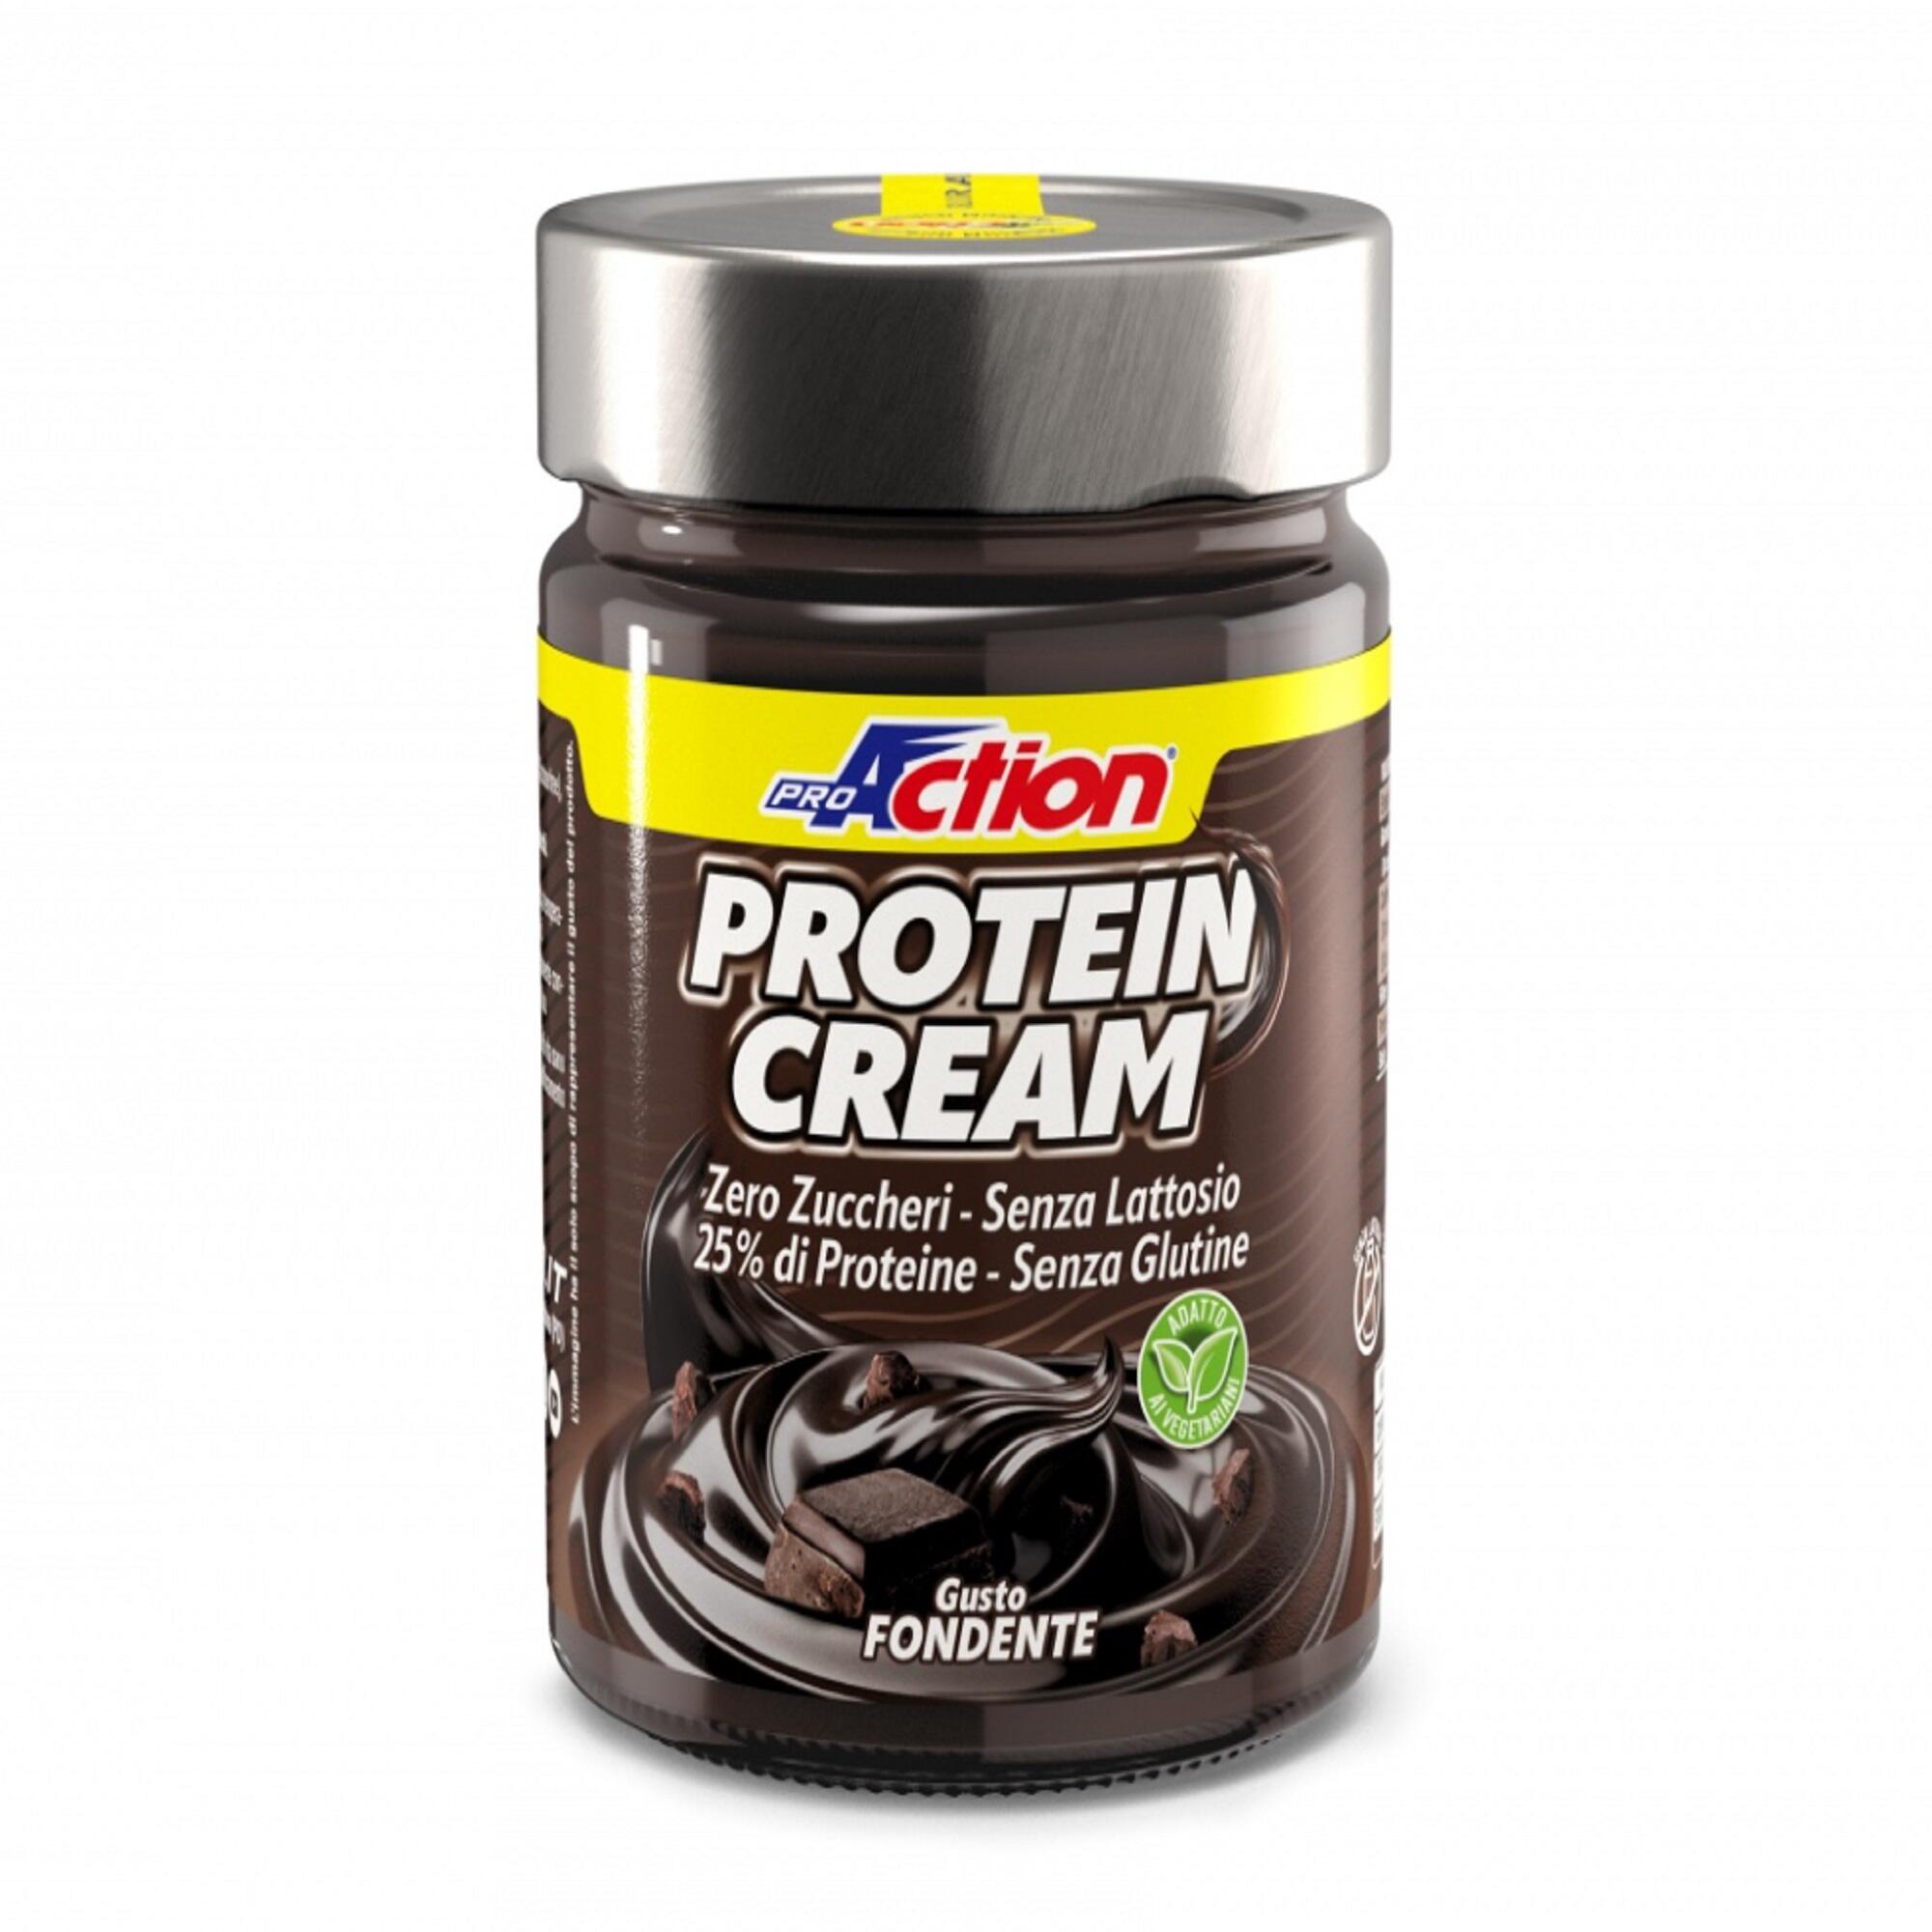 Decathlon | Crema spalmabile proteica Proaction fondente senza glutine, senza lattosio 300g. |  Proaction